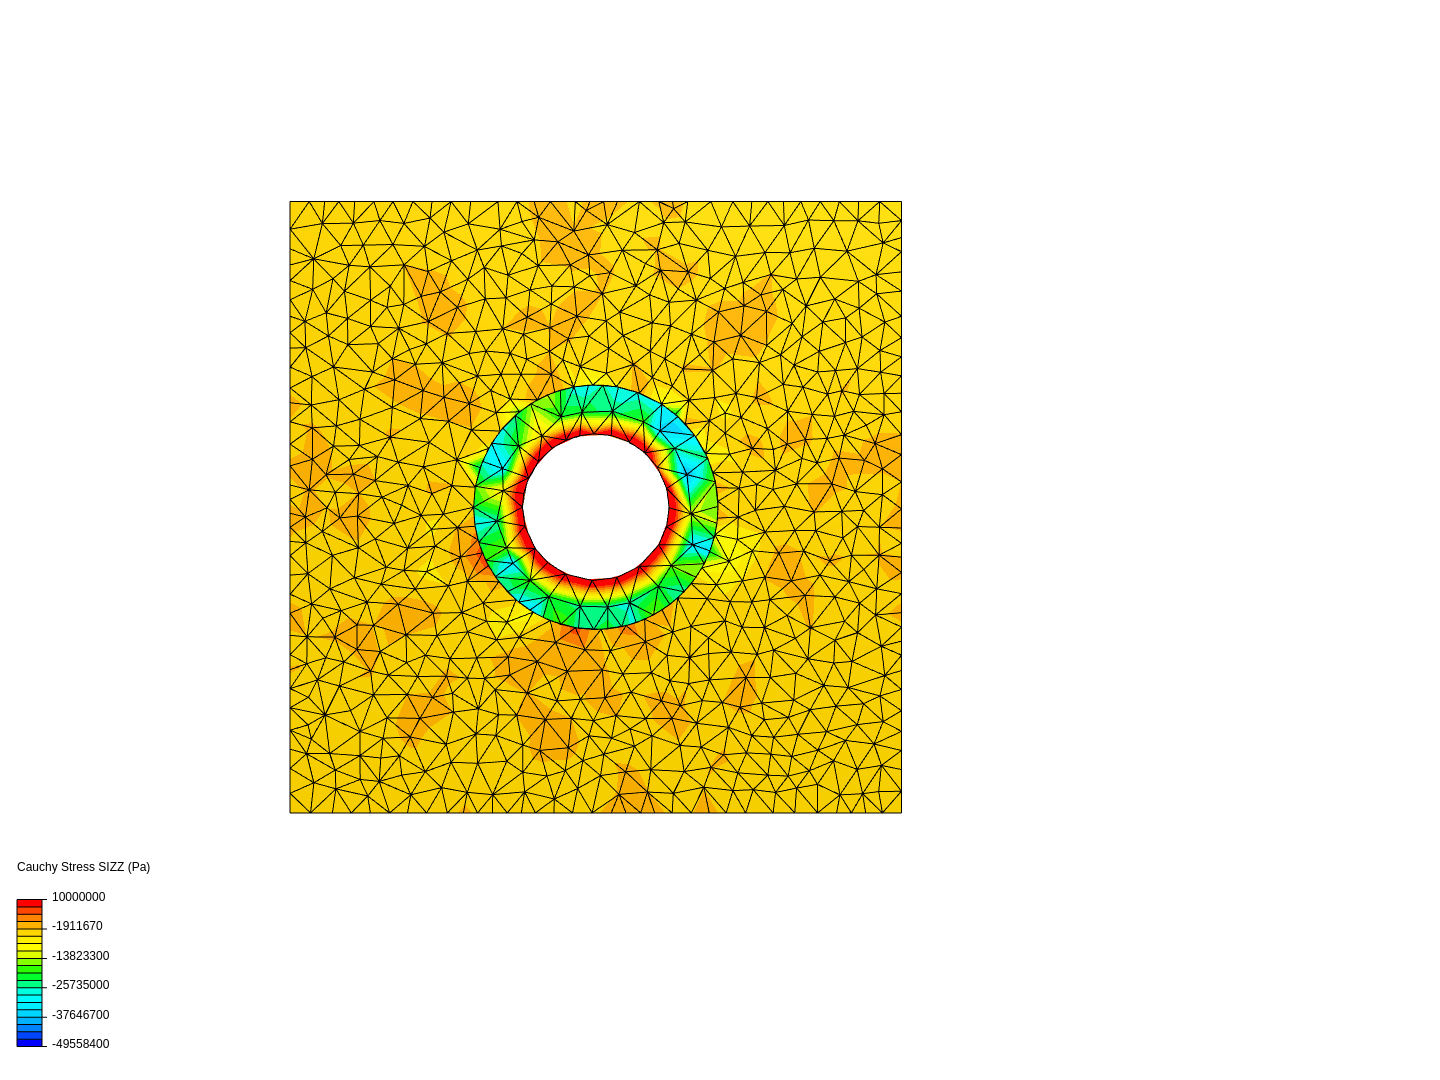 Square_hole_assembly image